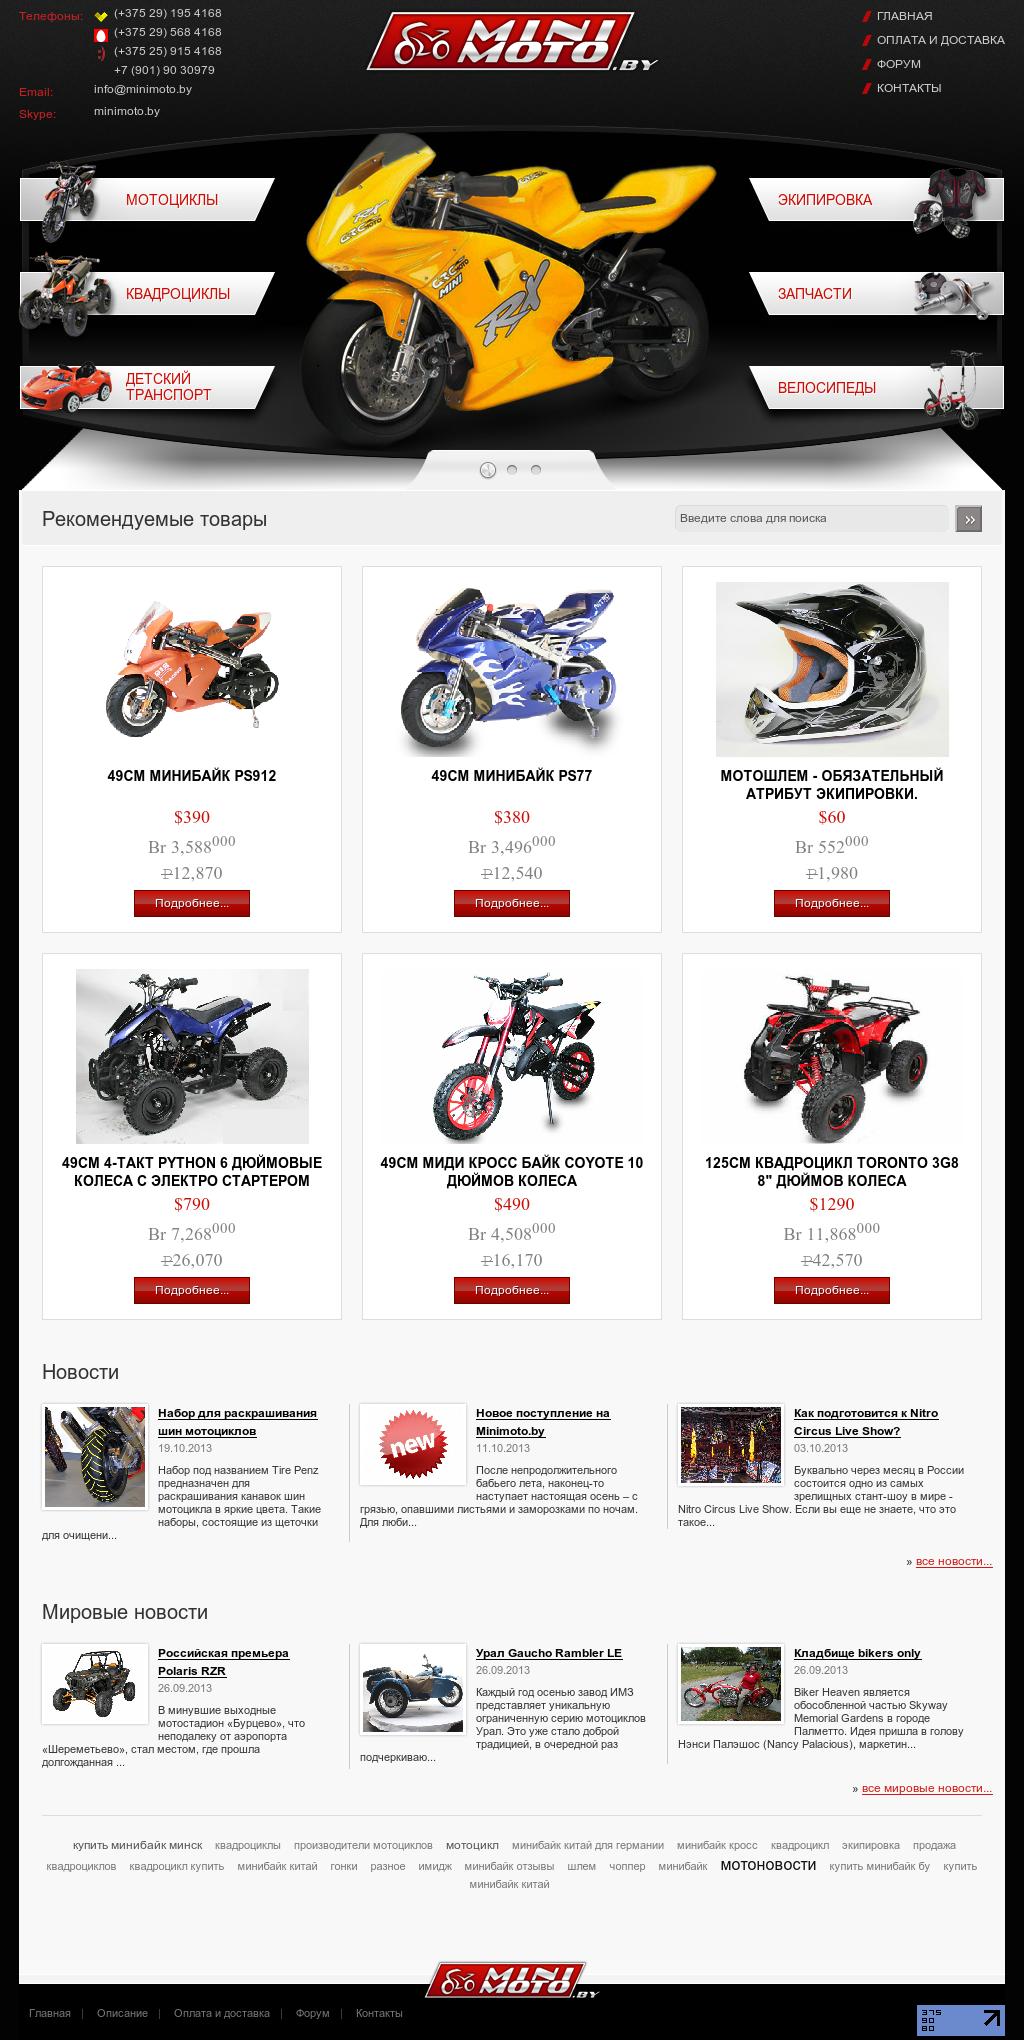 Minimoto.by - интернет магазин по продаже минибайков, квадроциклов